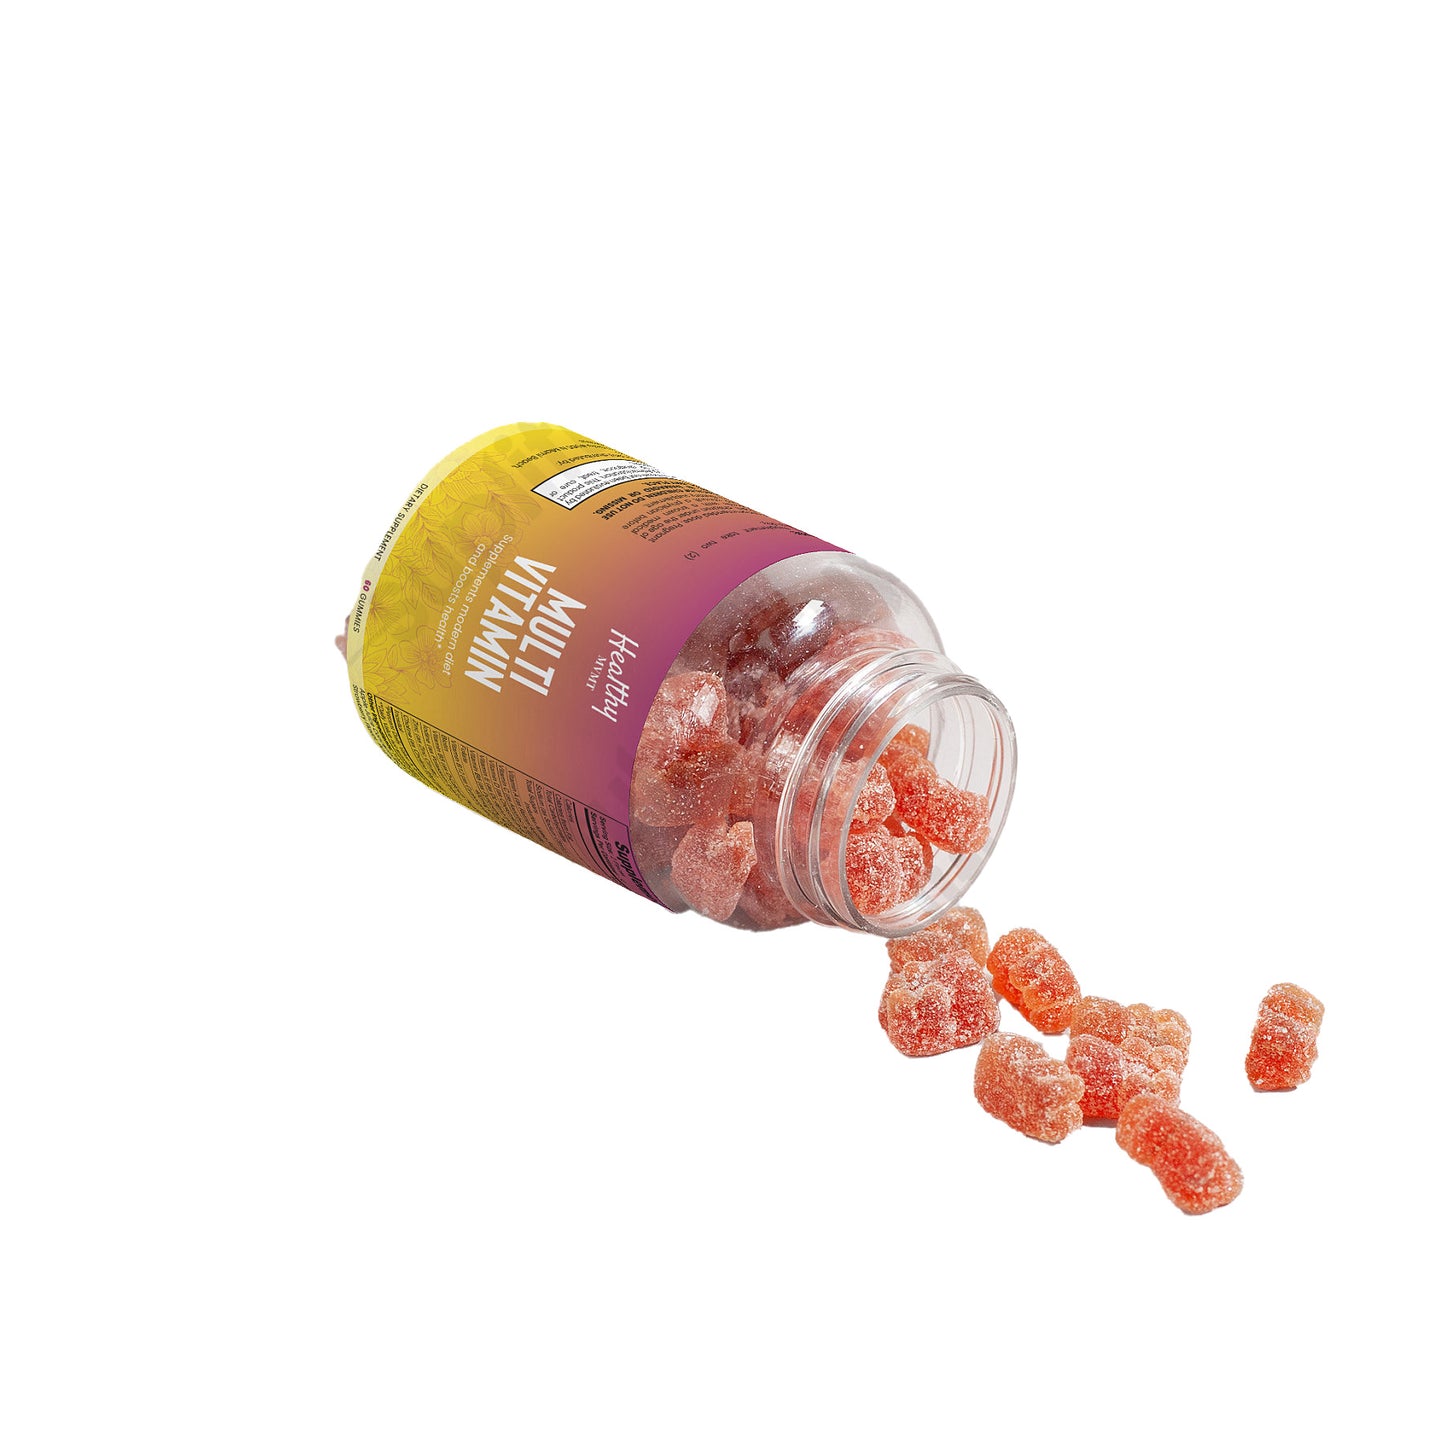 Multivitamin Bear Gummies (Adult) | HealthyMVMT